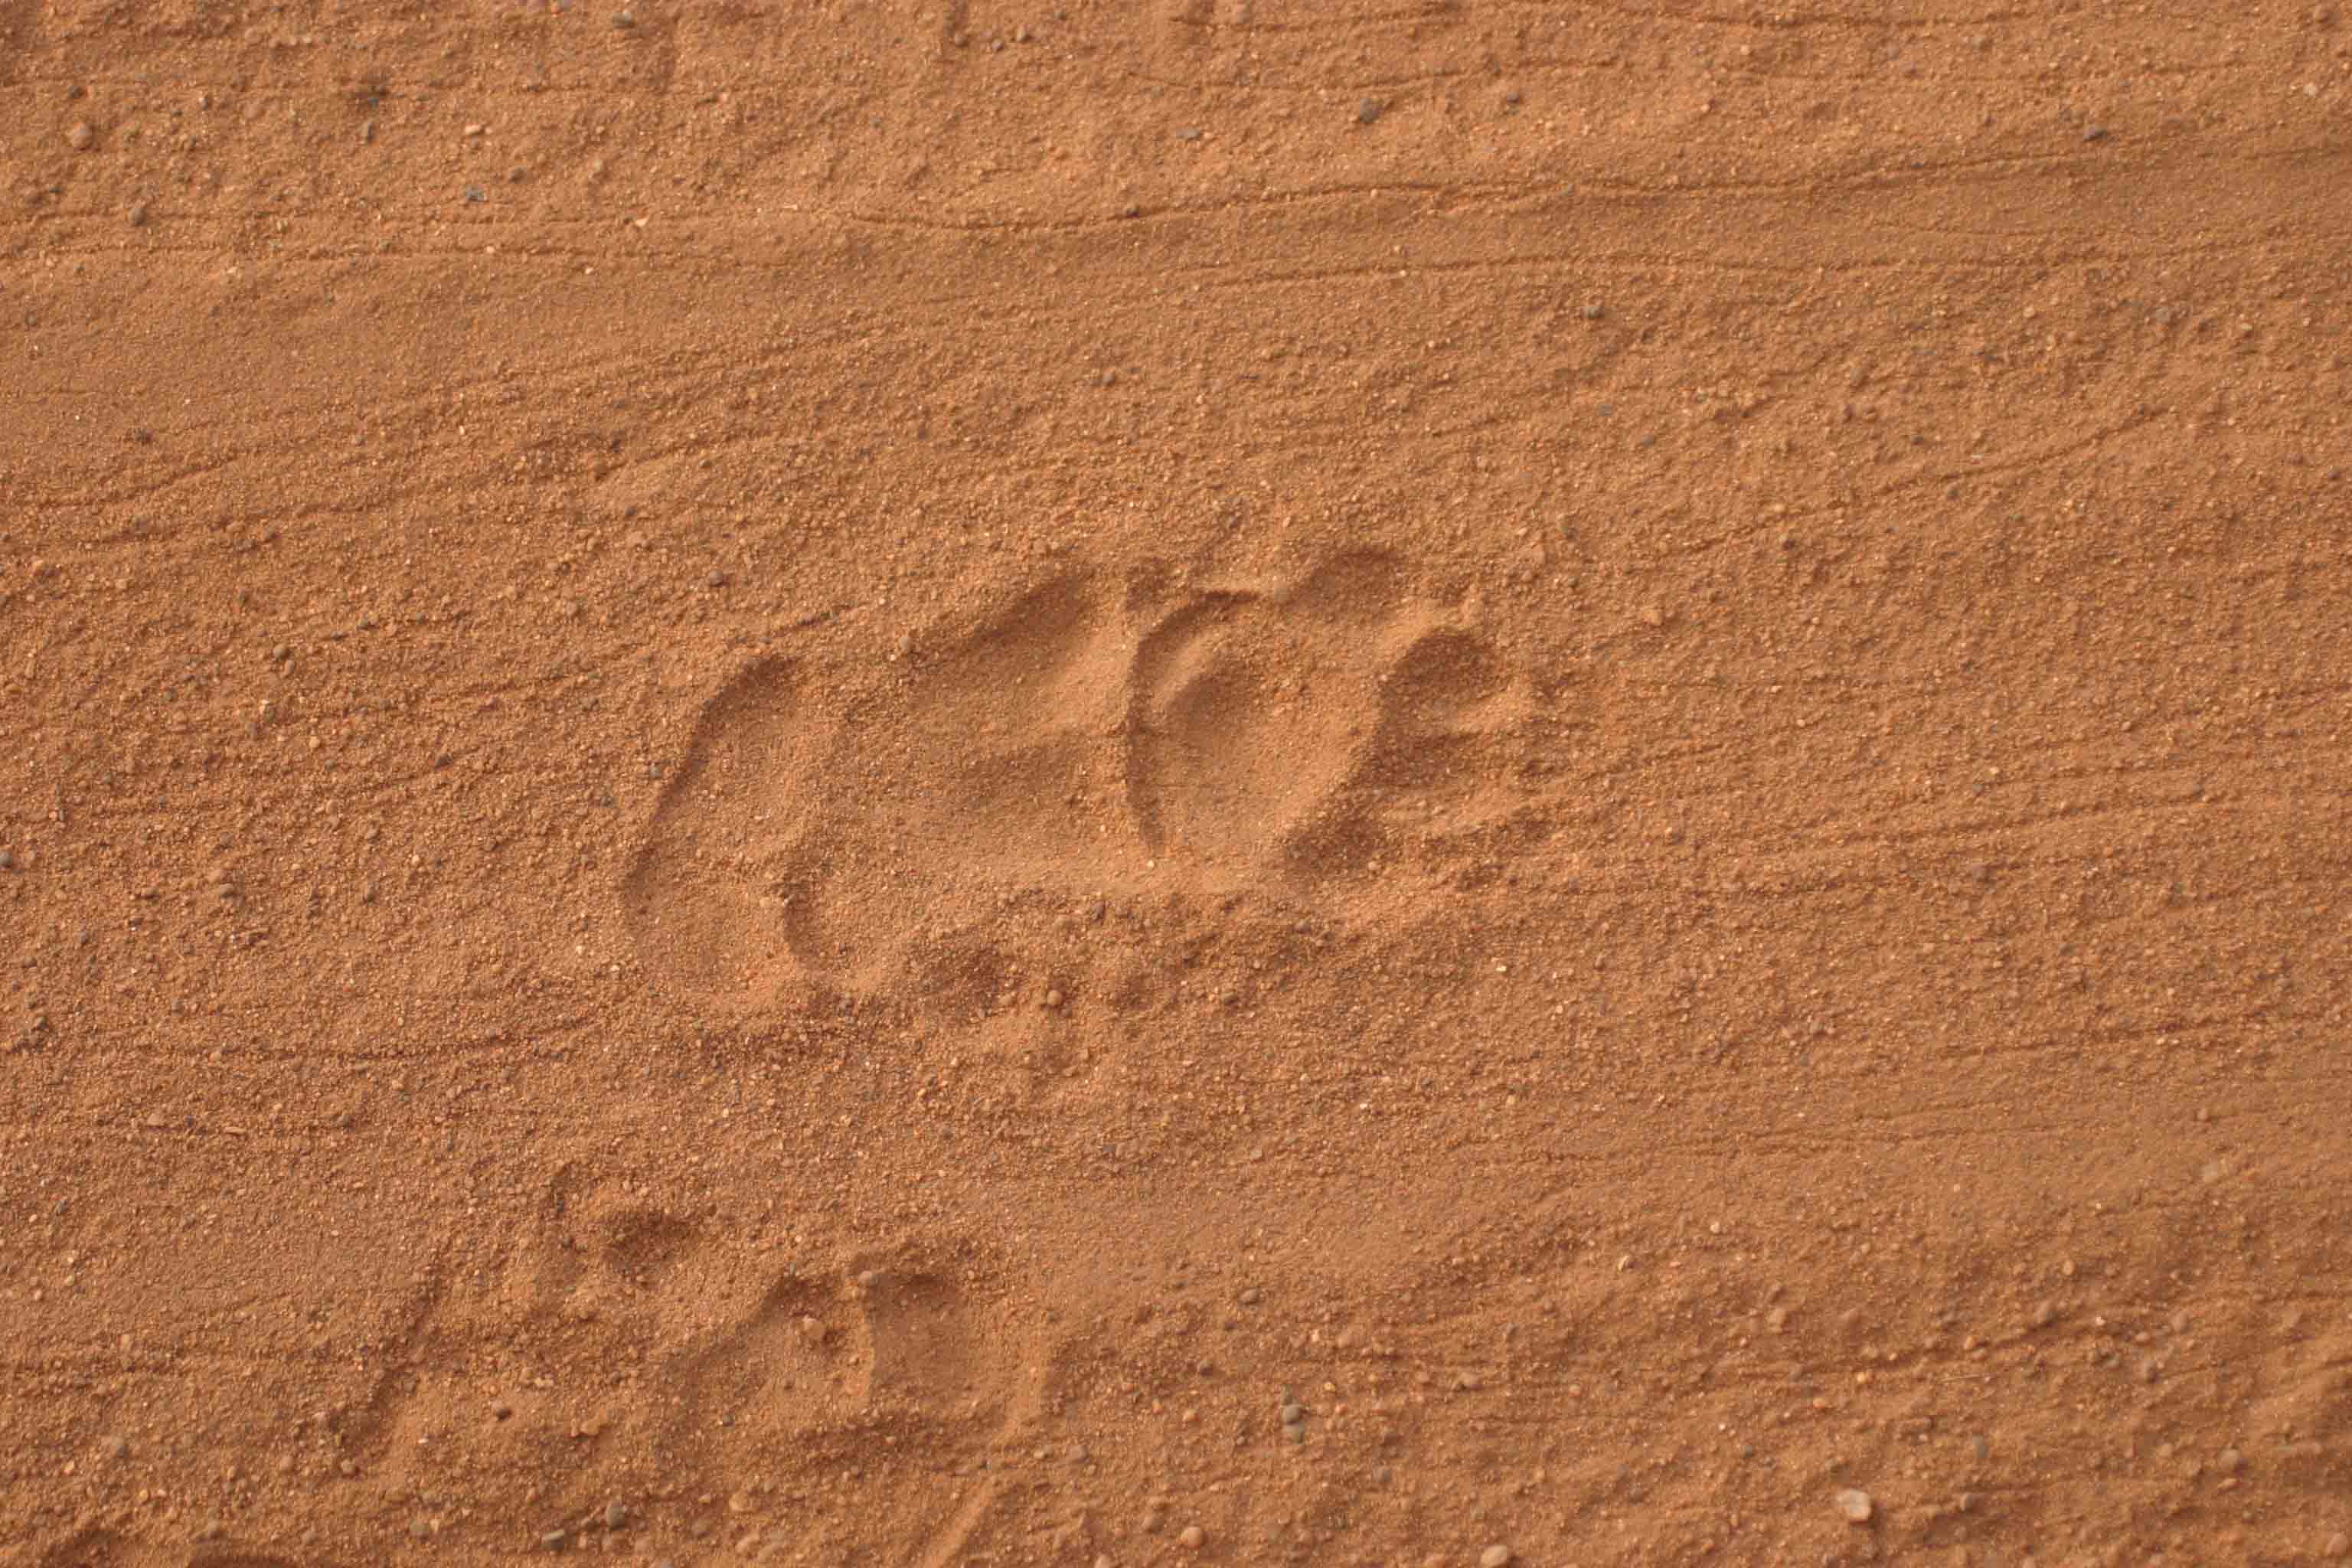 Sloth Bear Footprints Yala -